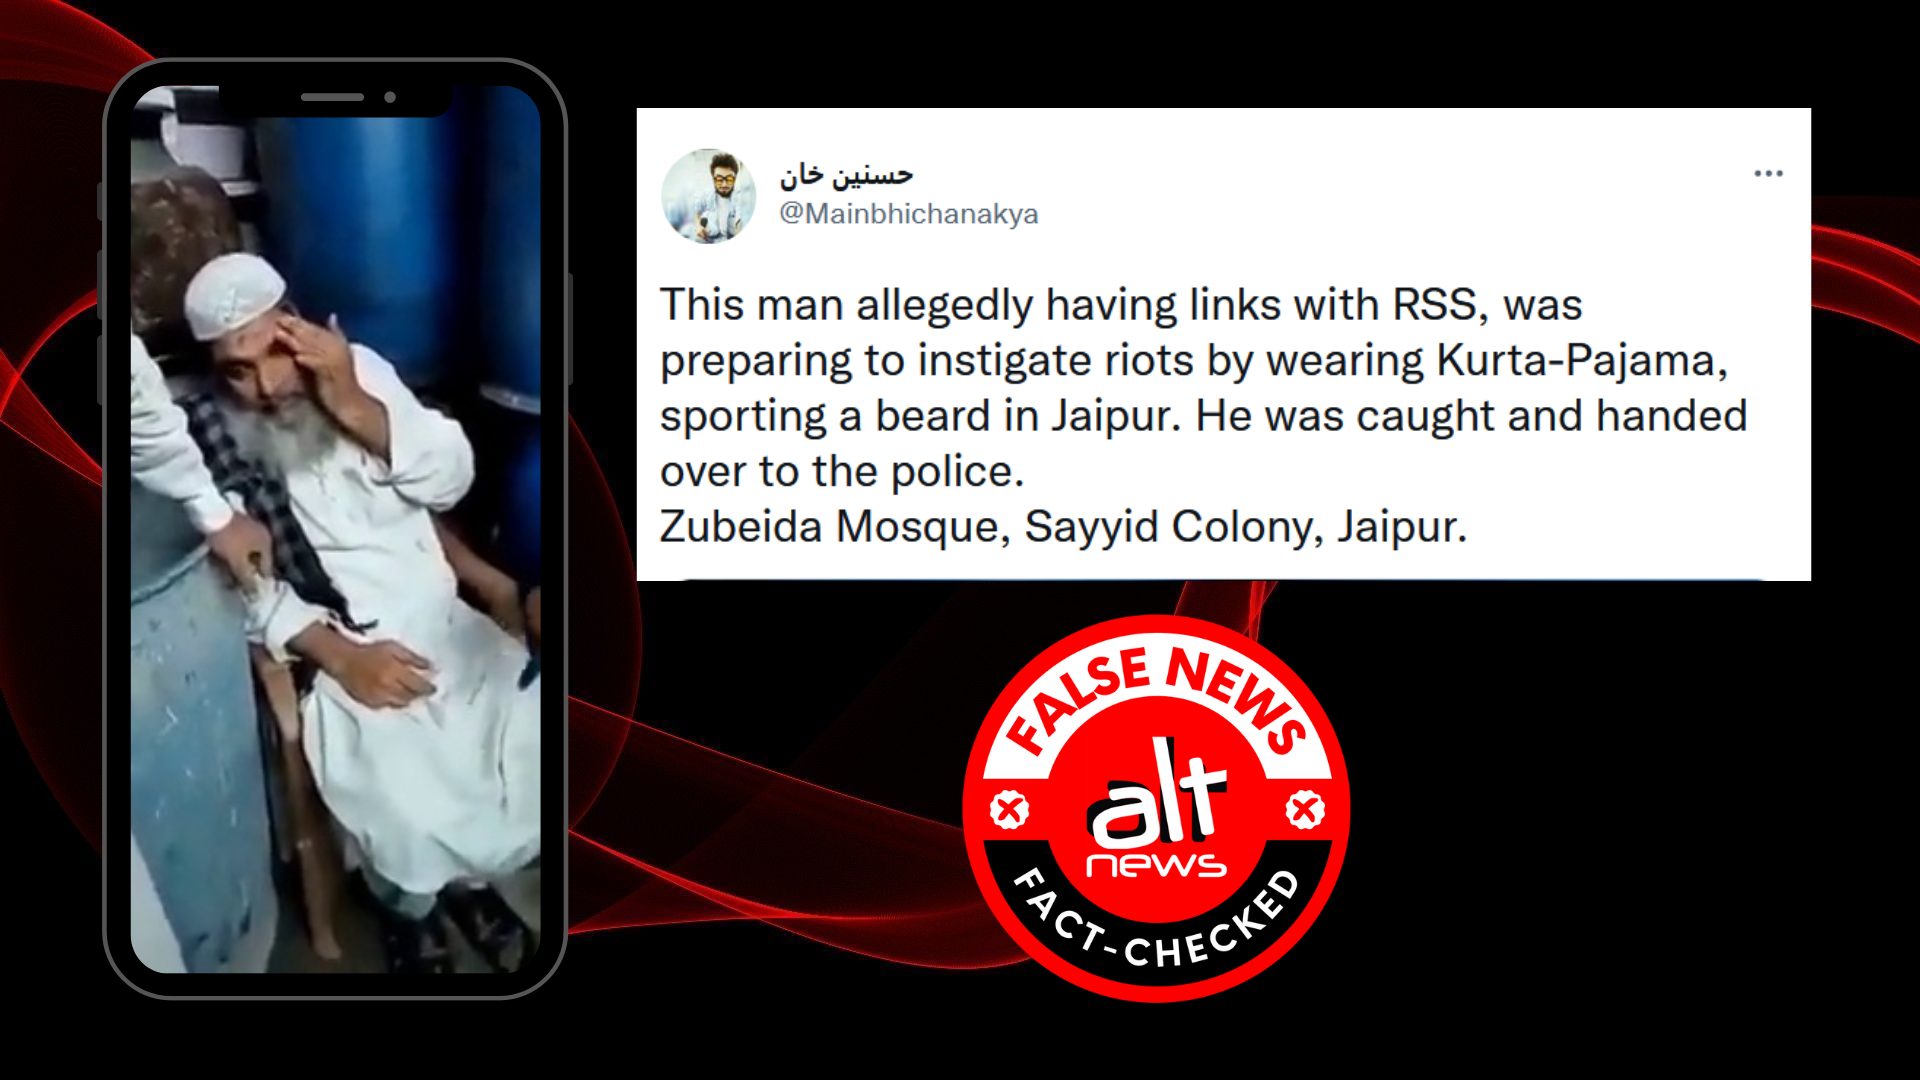 Police denies 'RSS links' of man falsely believed to fake Muslim identity in Jaipur - Alt News